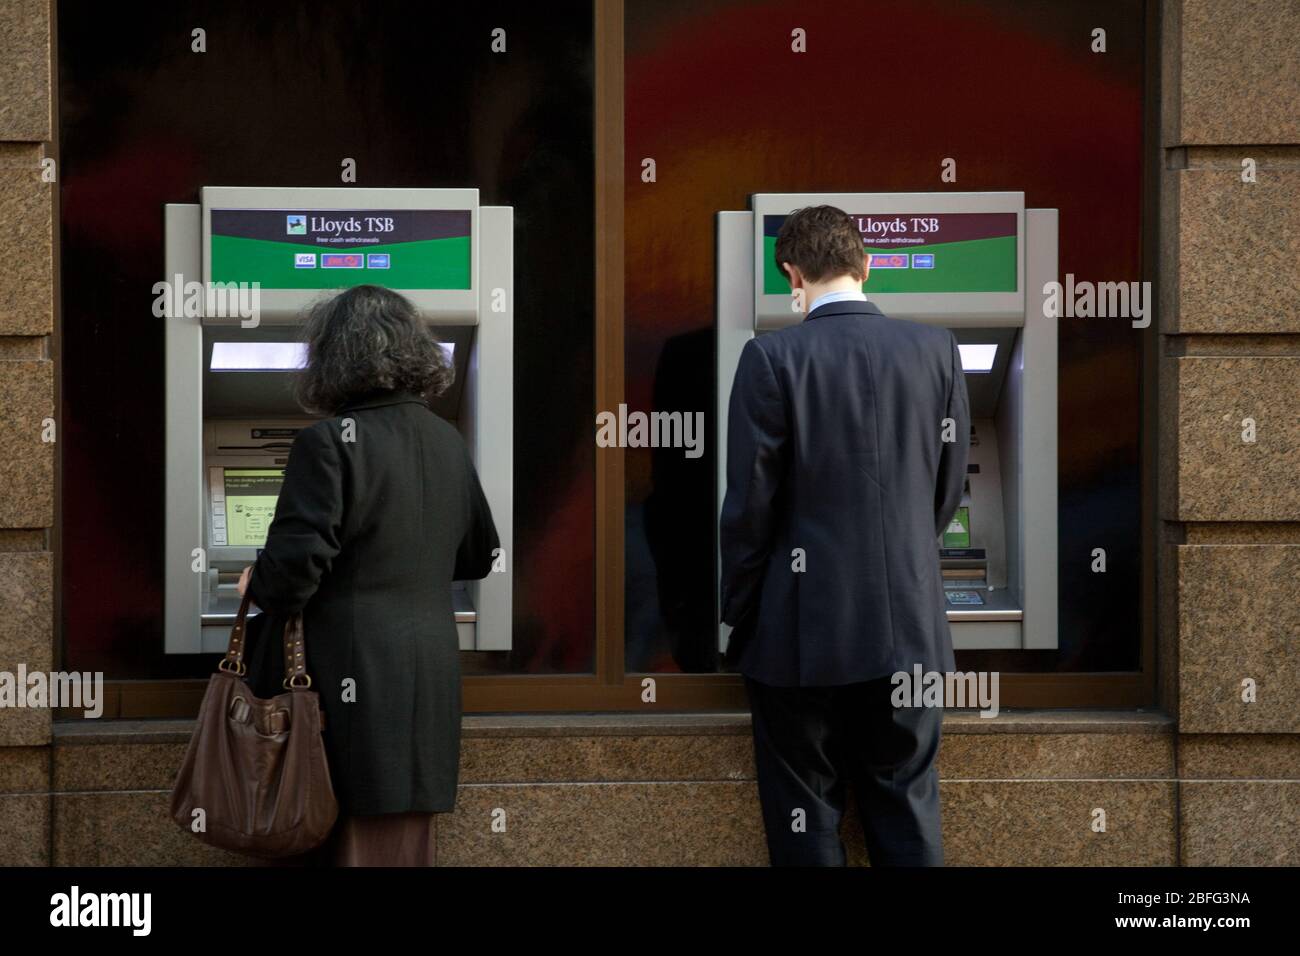 Customers using a Lloyds TSB cash point. Stock Photo